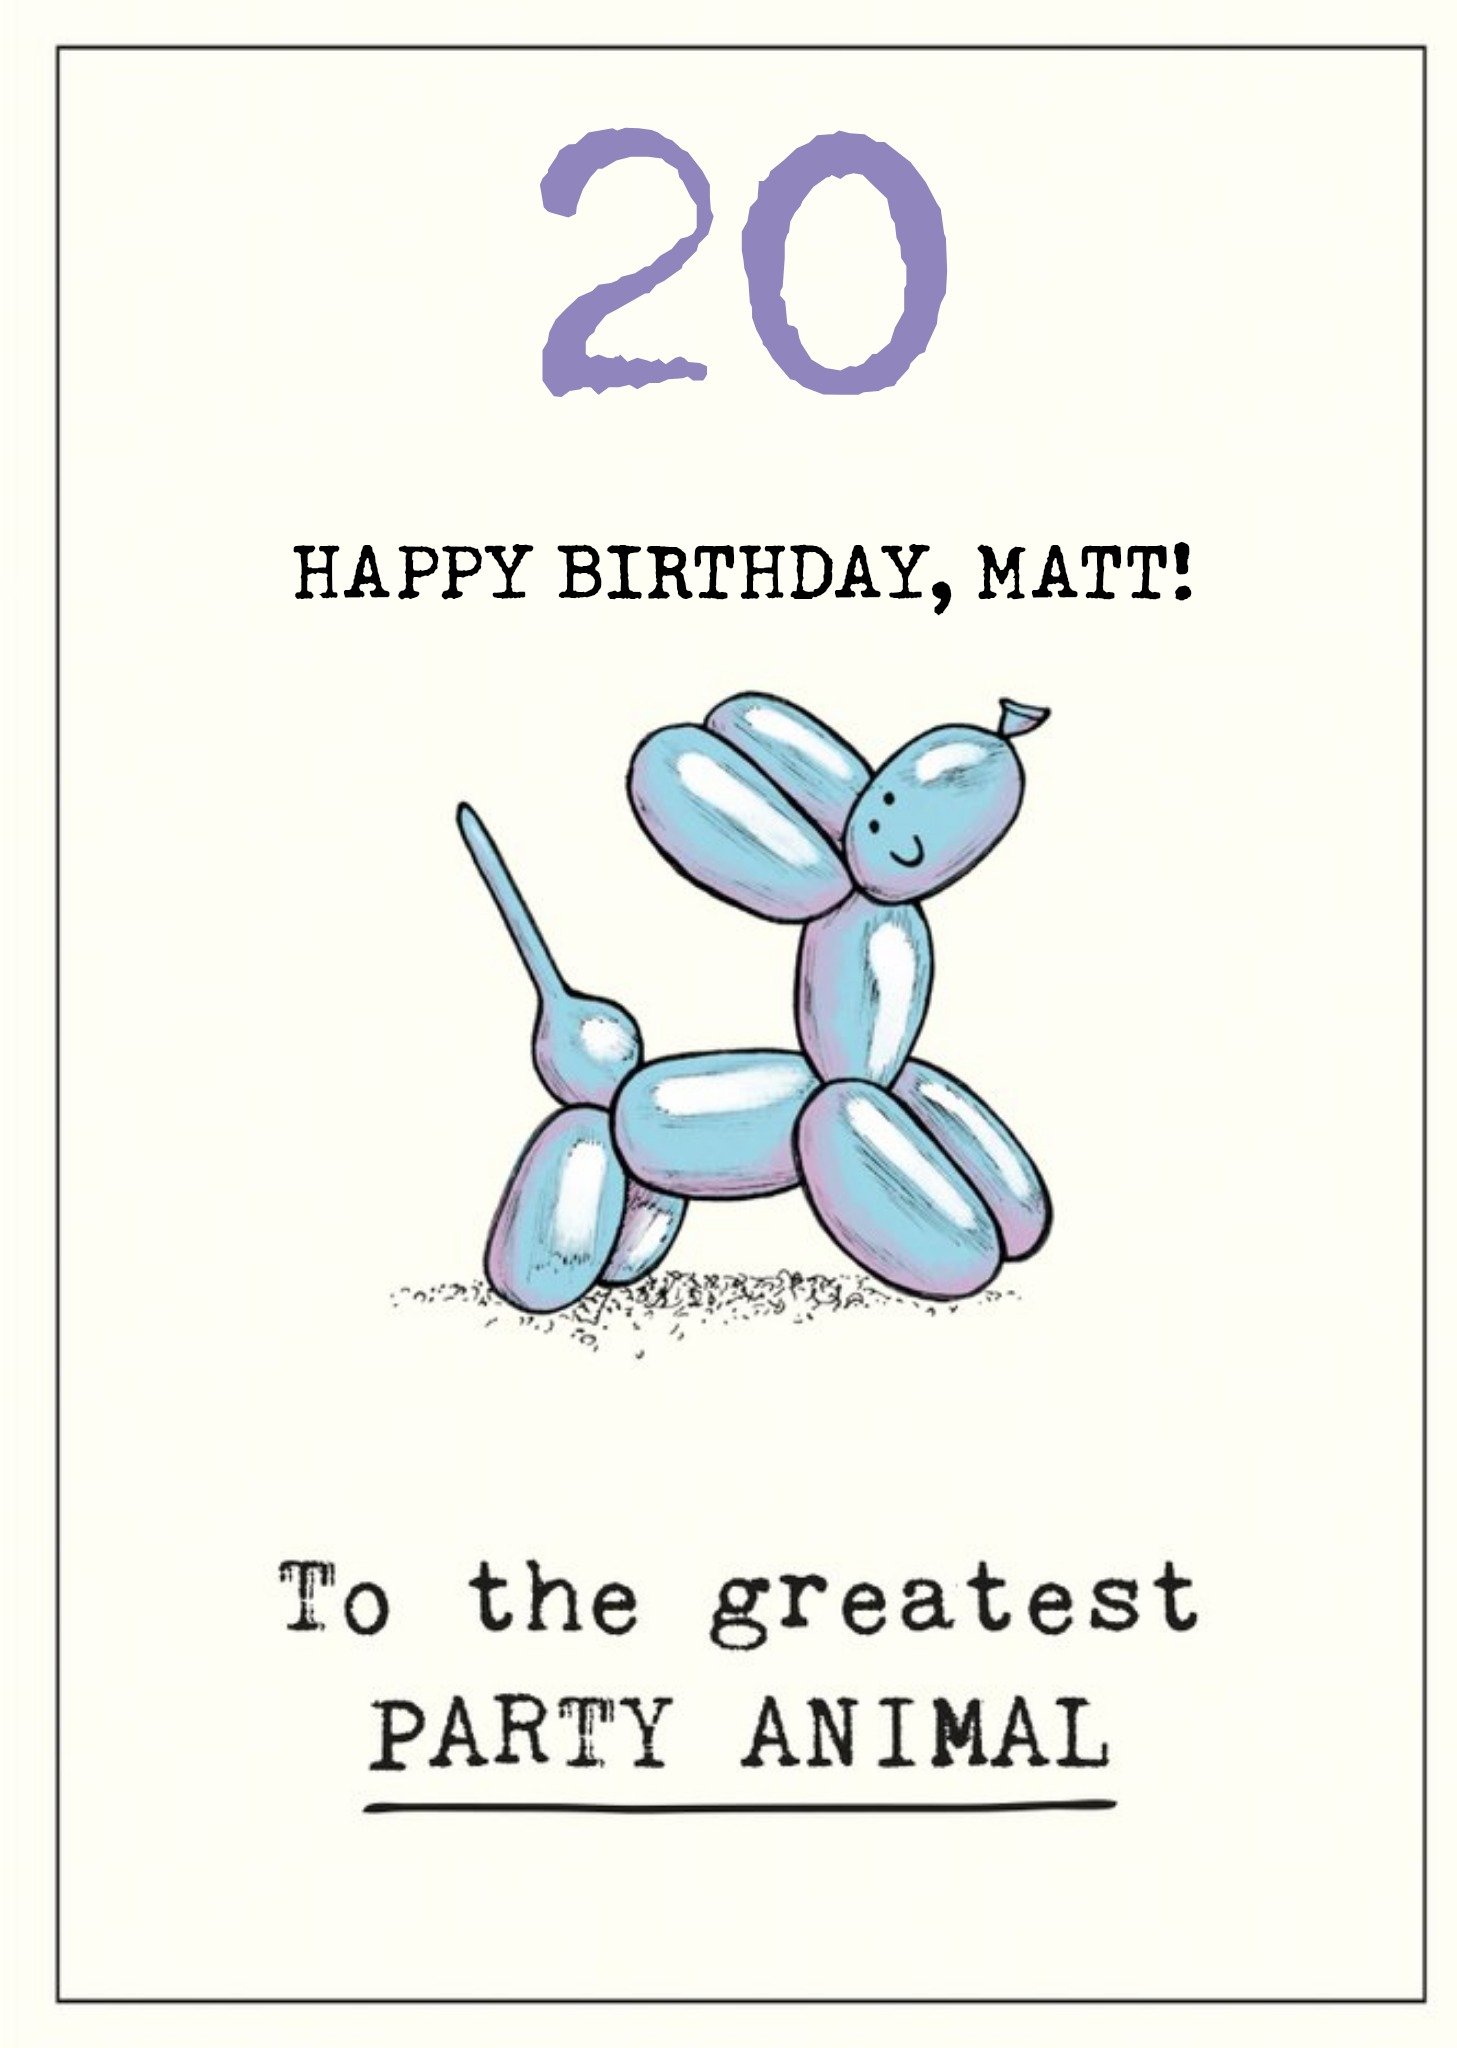 Moonpig Funny Illustrative Party Animal Balloon Birthday Card Ecard